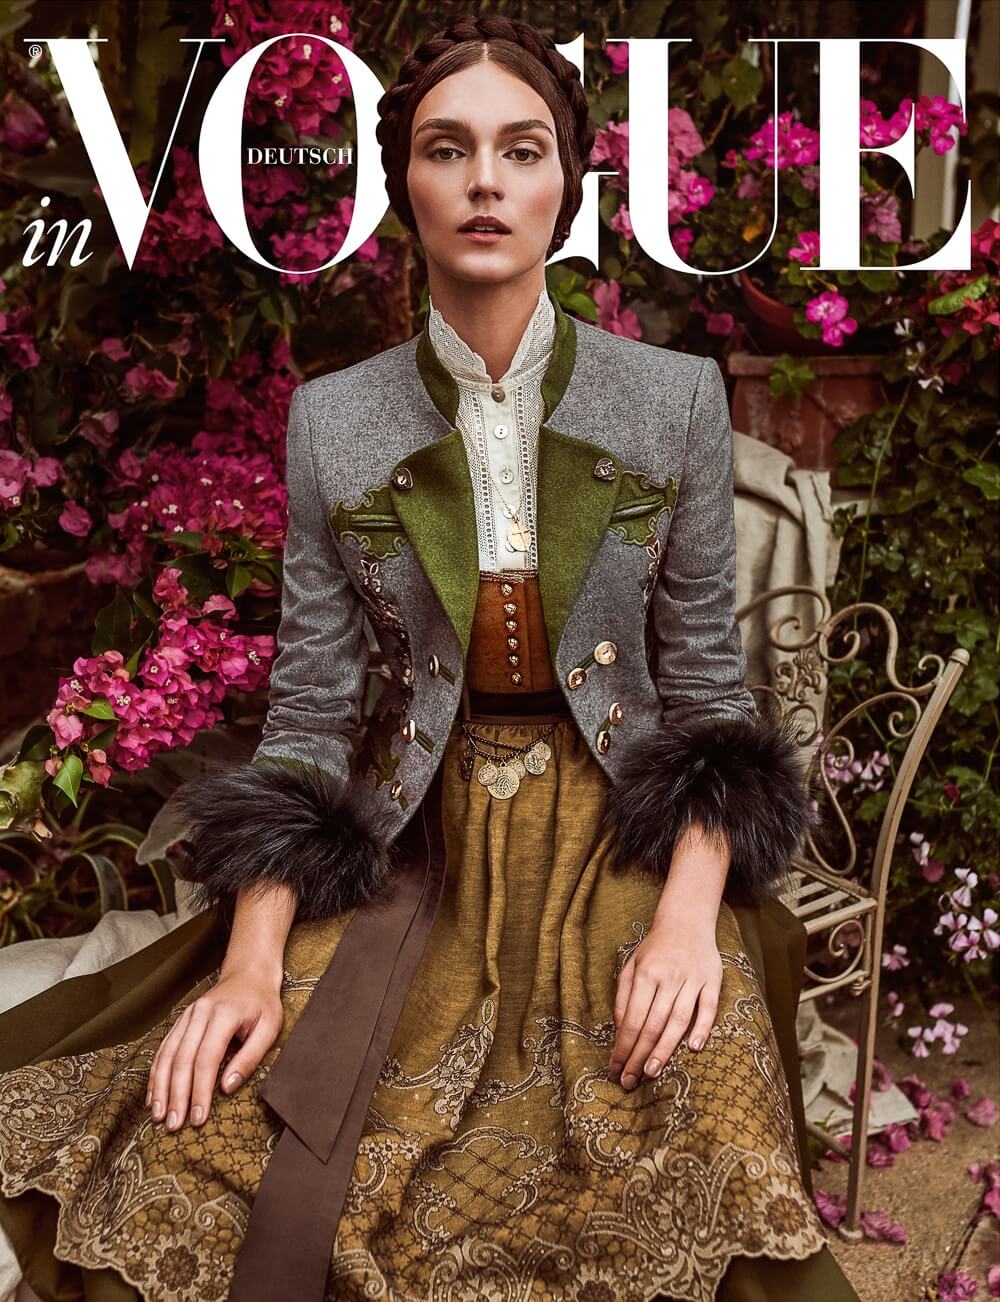 Vogue-Germany-August-2018-Deimante-Misiunaite-Andreas-Ortner-4